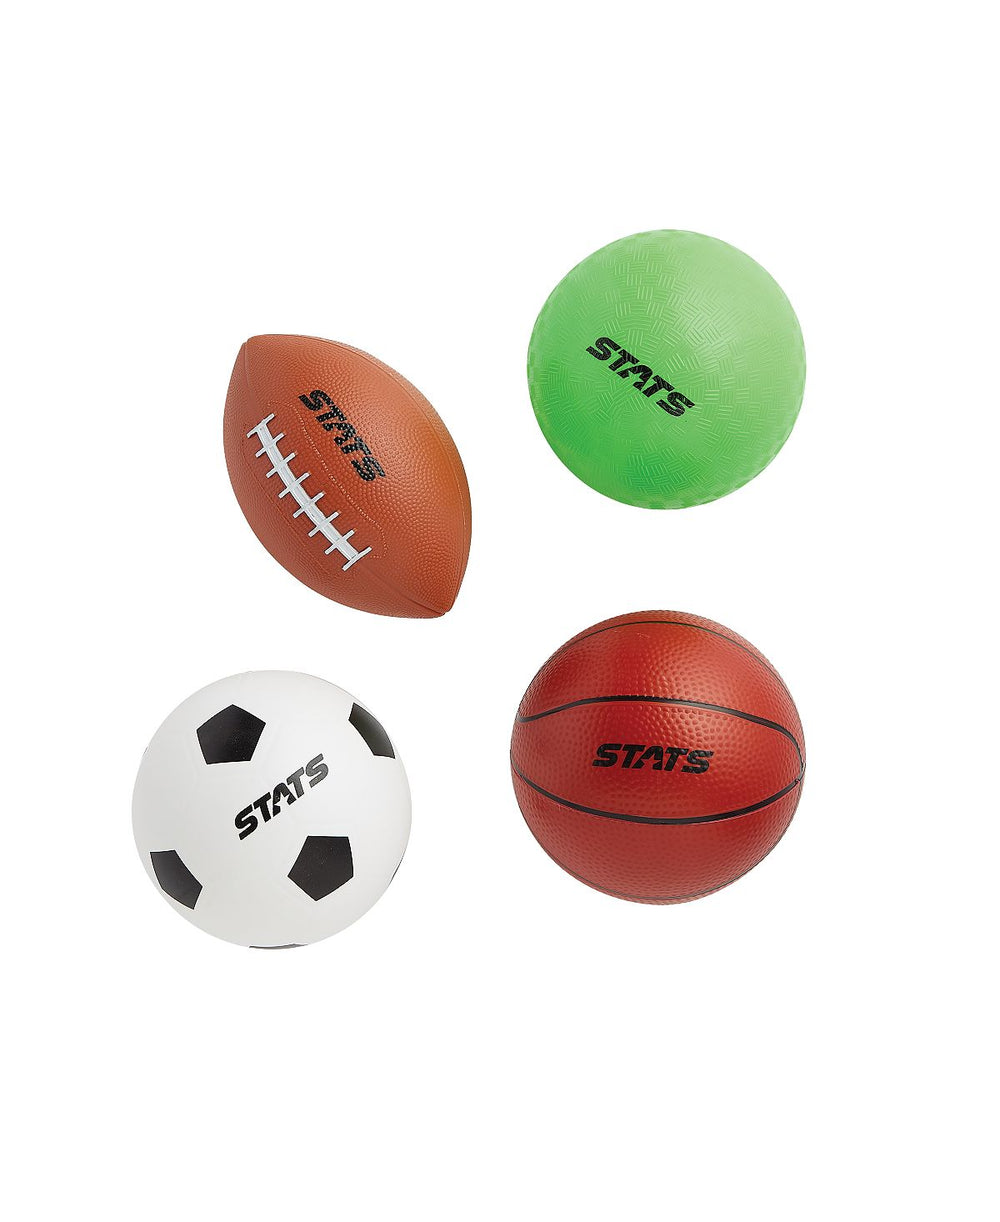 Stats 4-Pack Inflatable Sports Ball Set for Kids - Soccer, Basketball, Football, Kickball